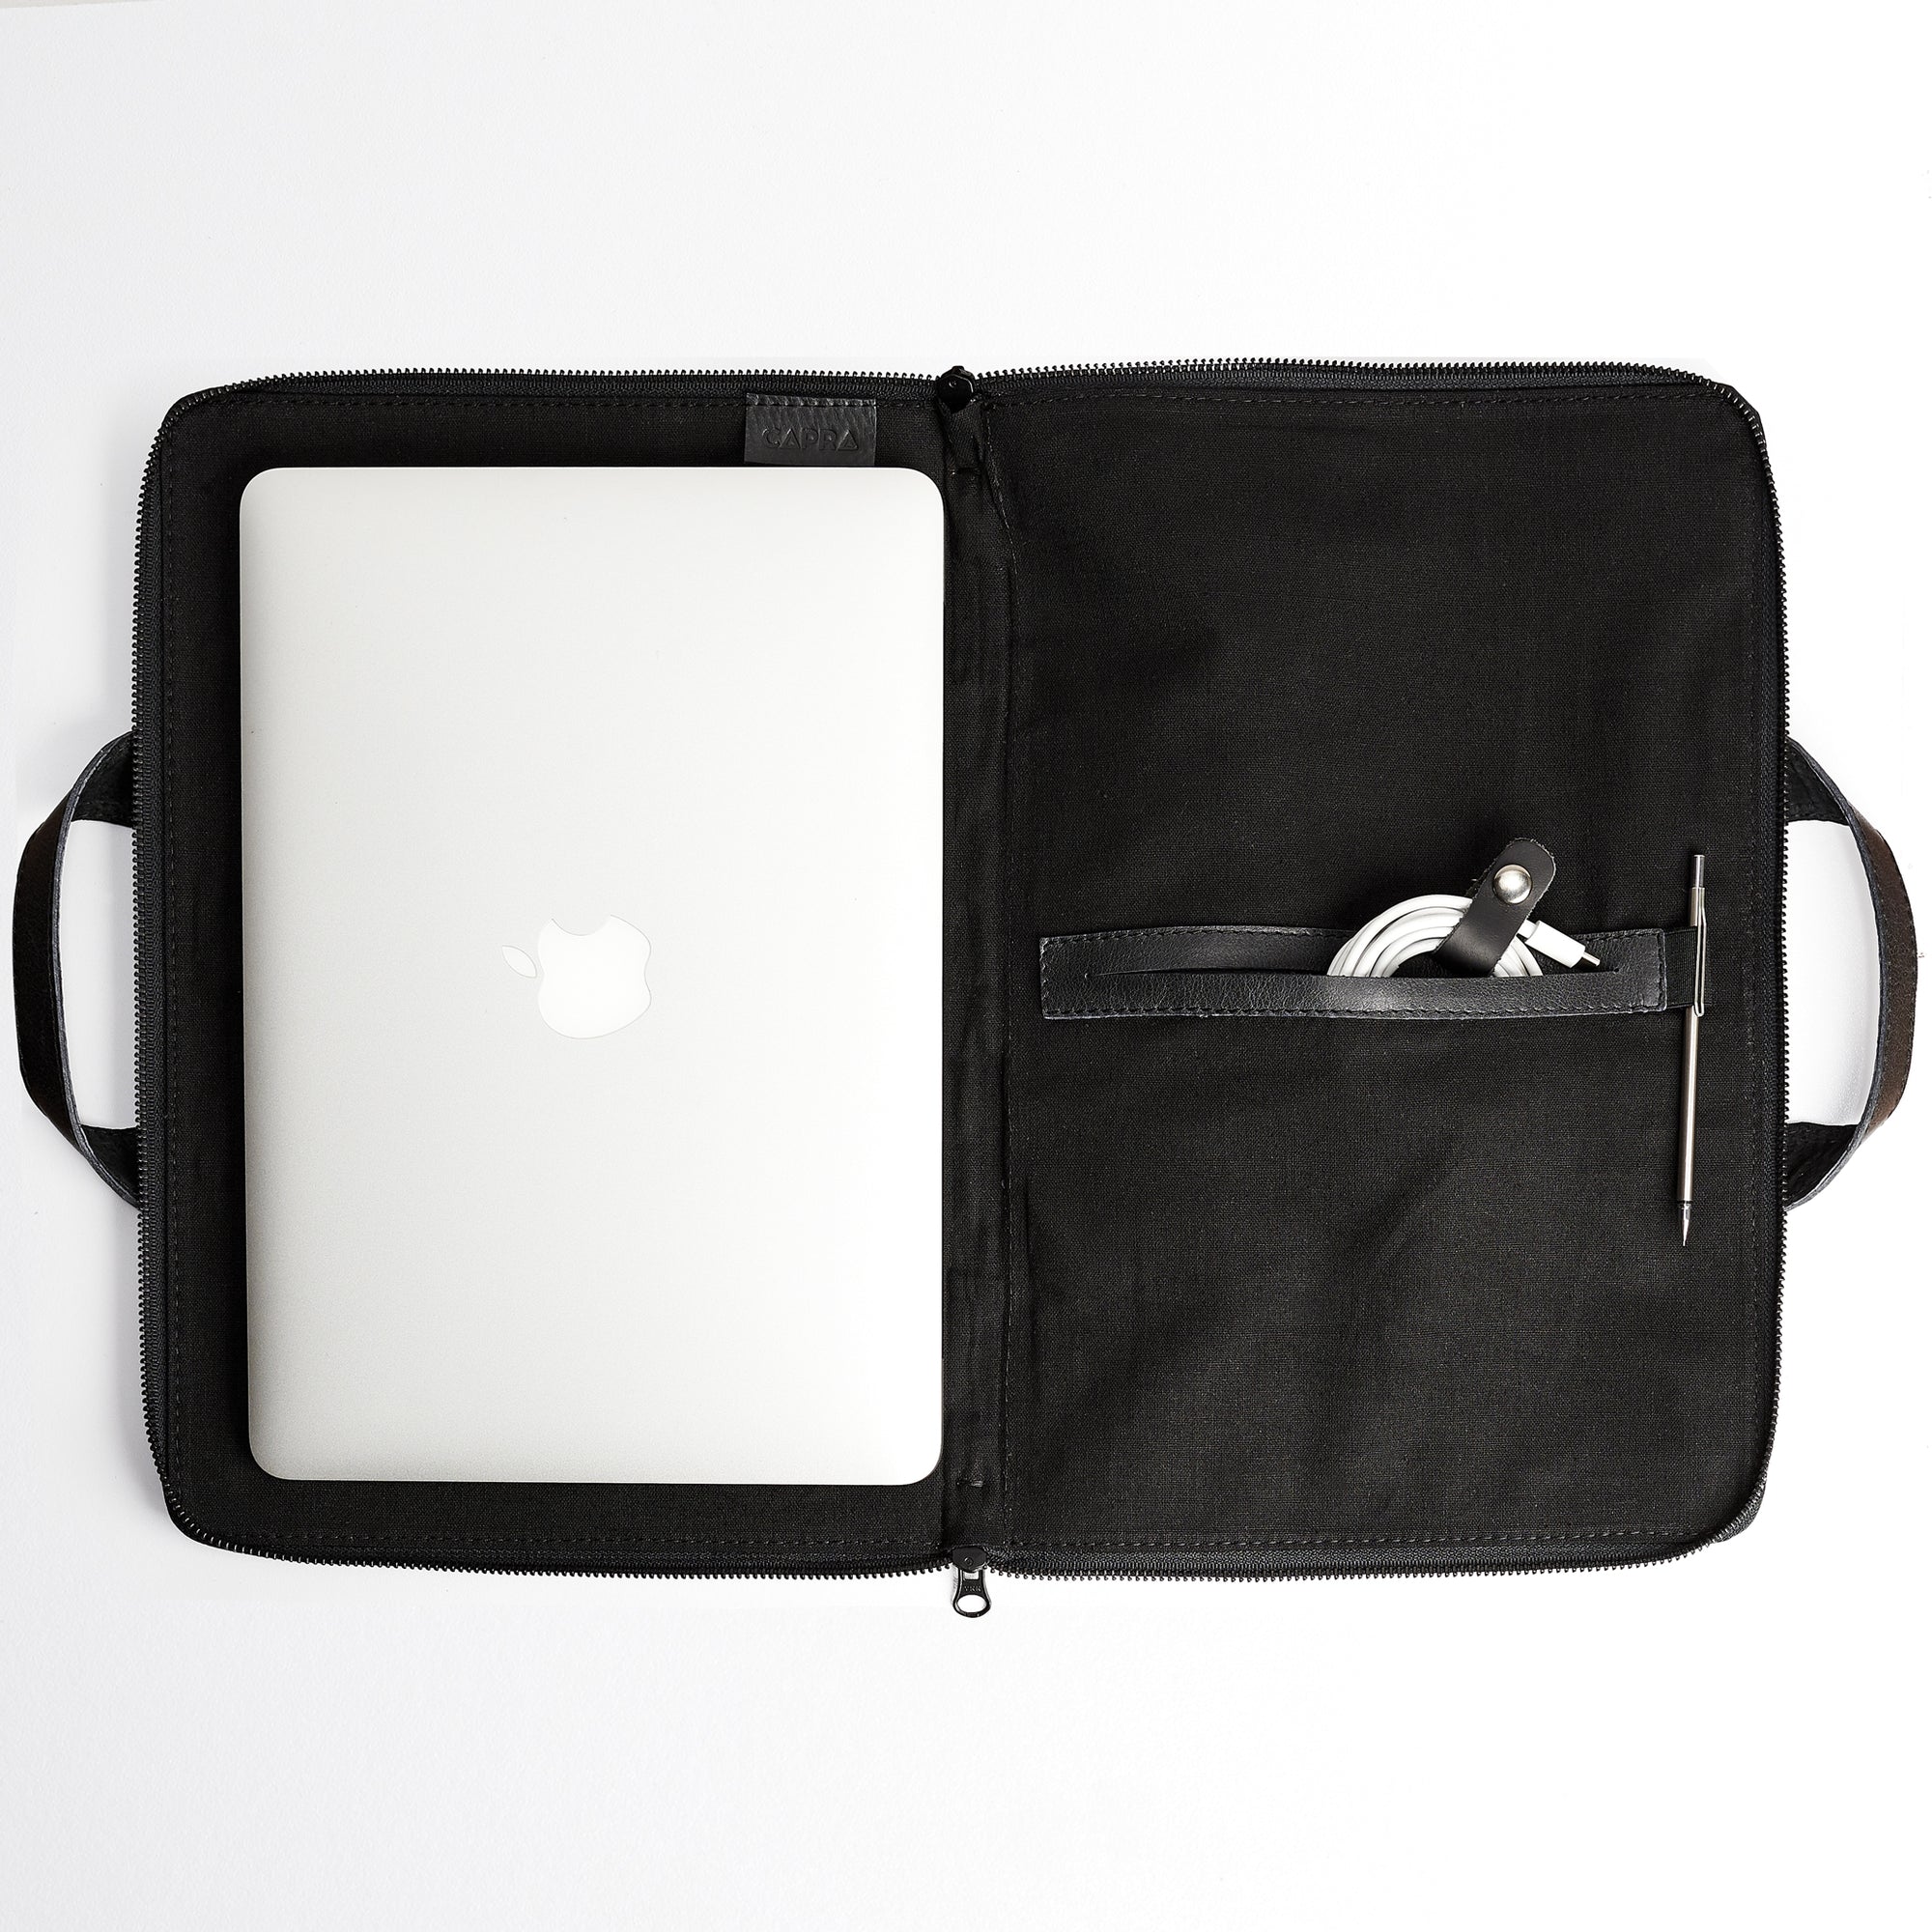 Linen interior. Muze Laptop Portfolio Business Document Organizer by Capra Leather